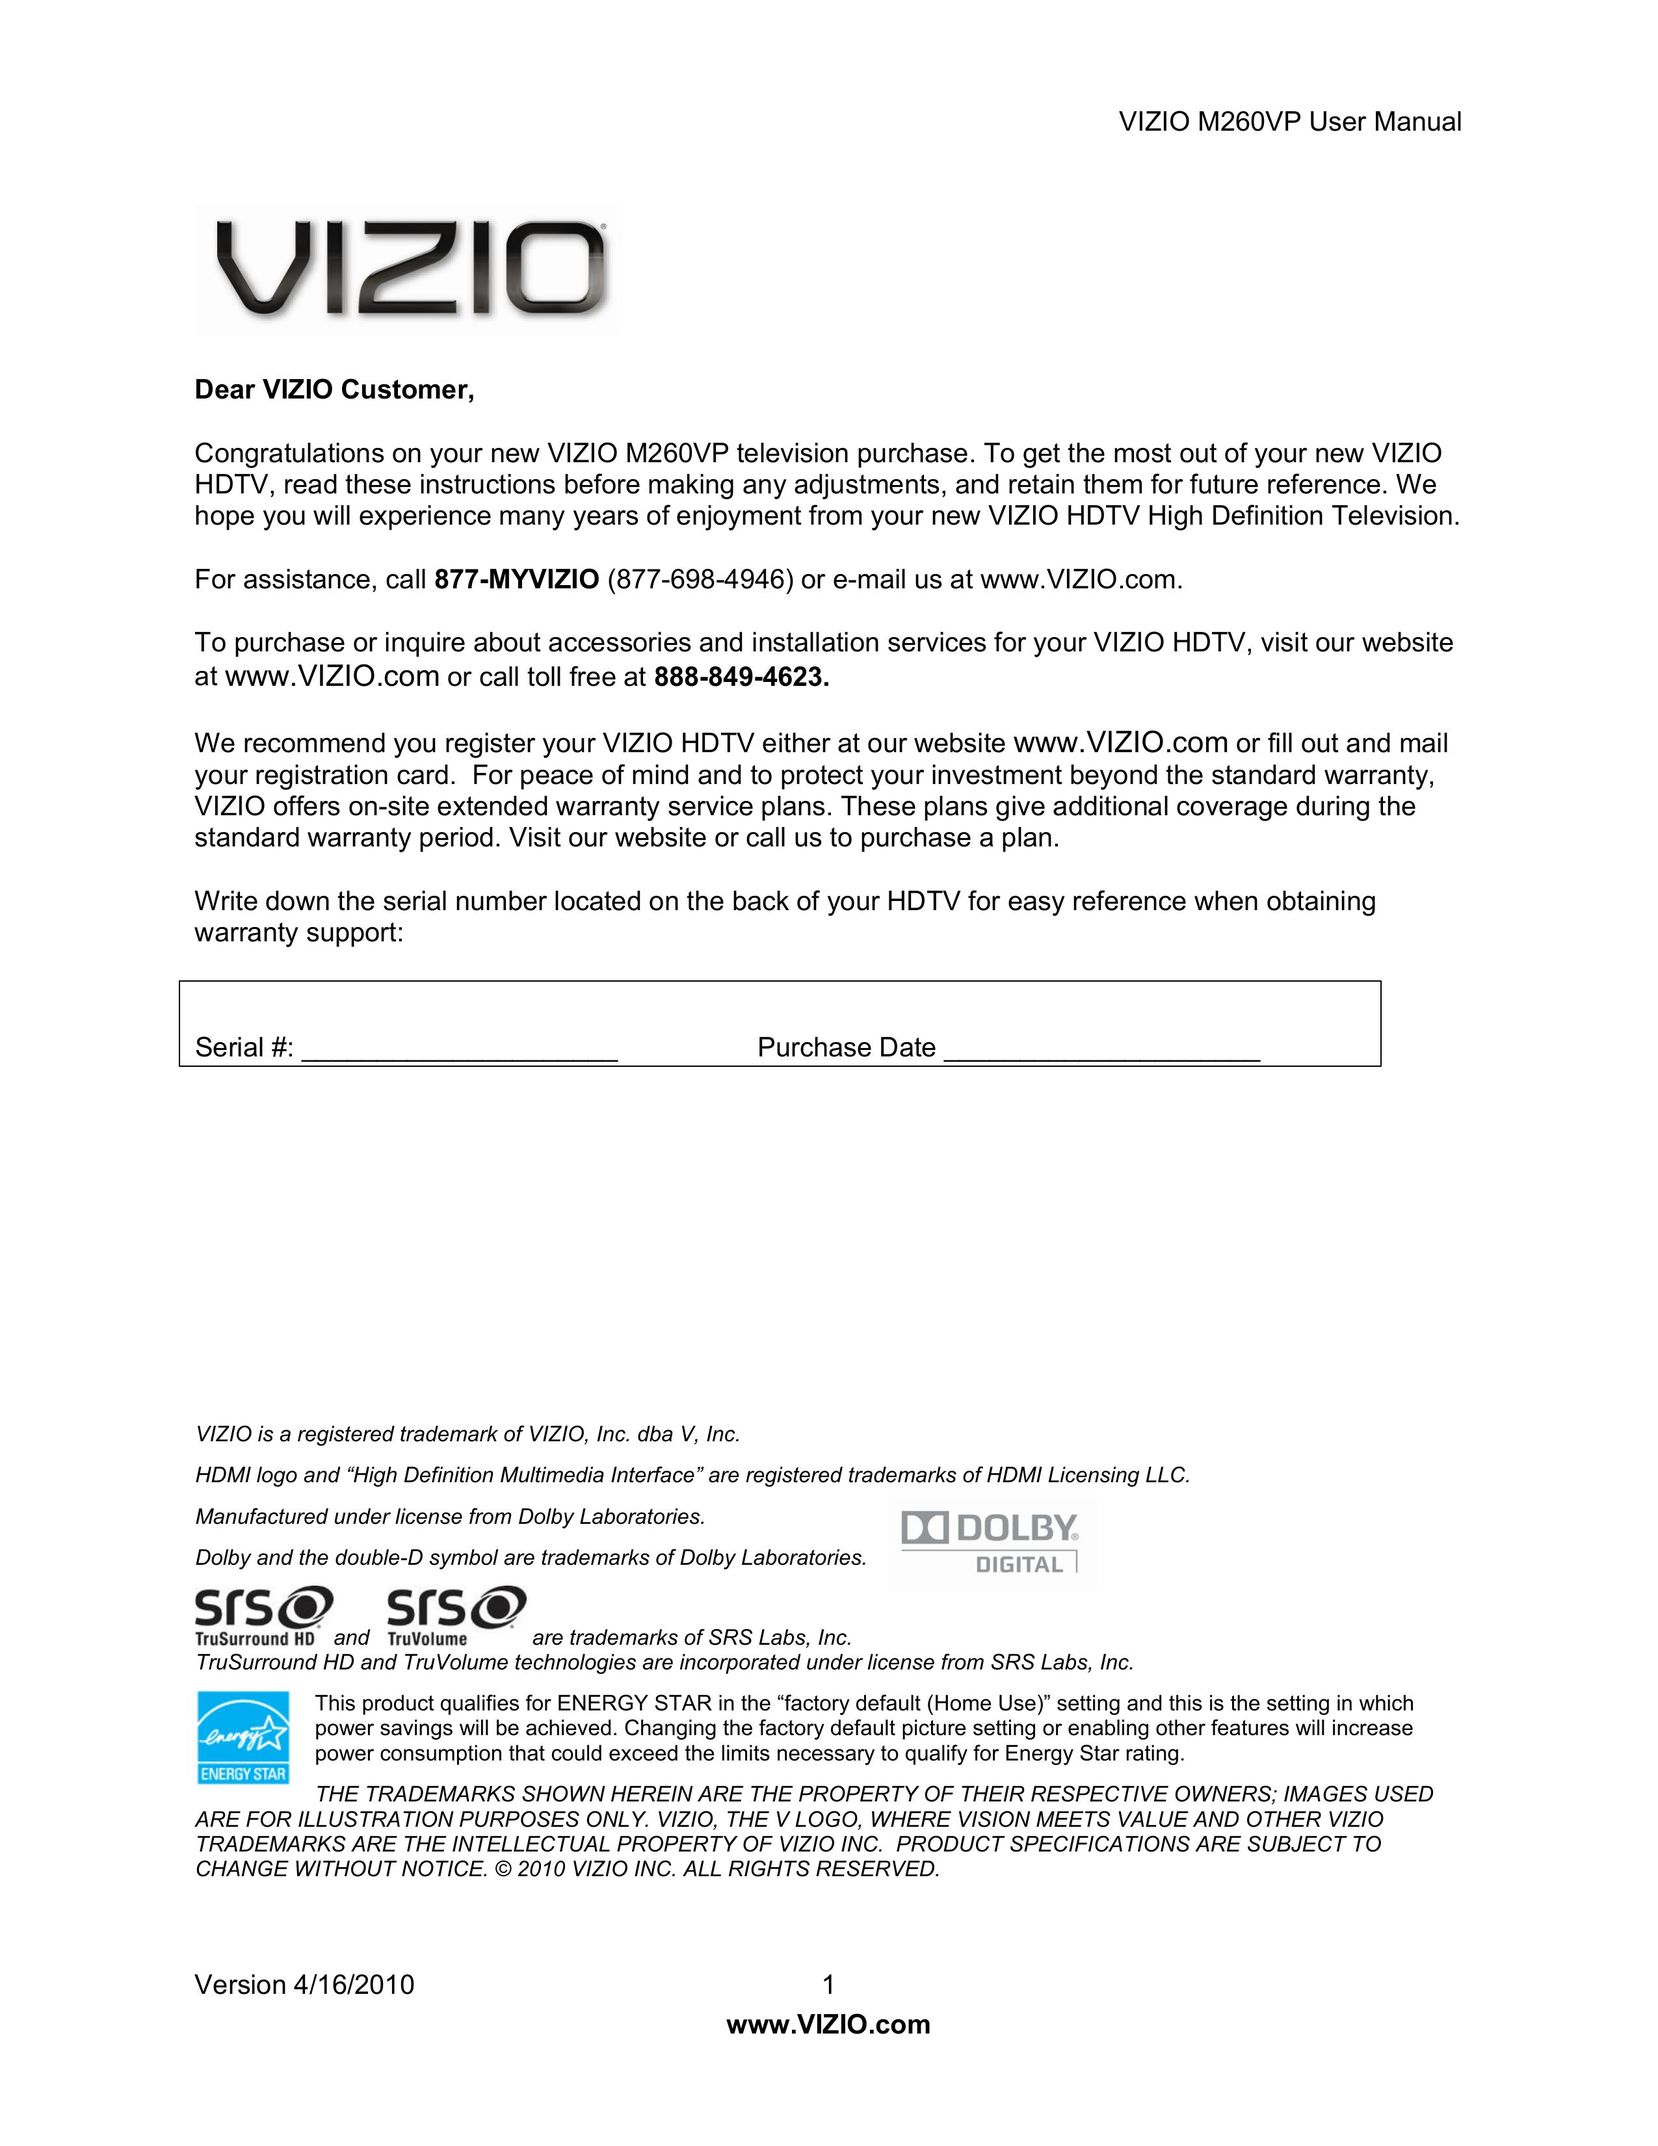 Vizio M260VP Car Satellite TV System User Manual